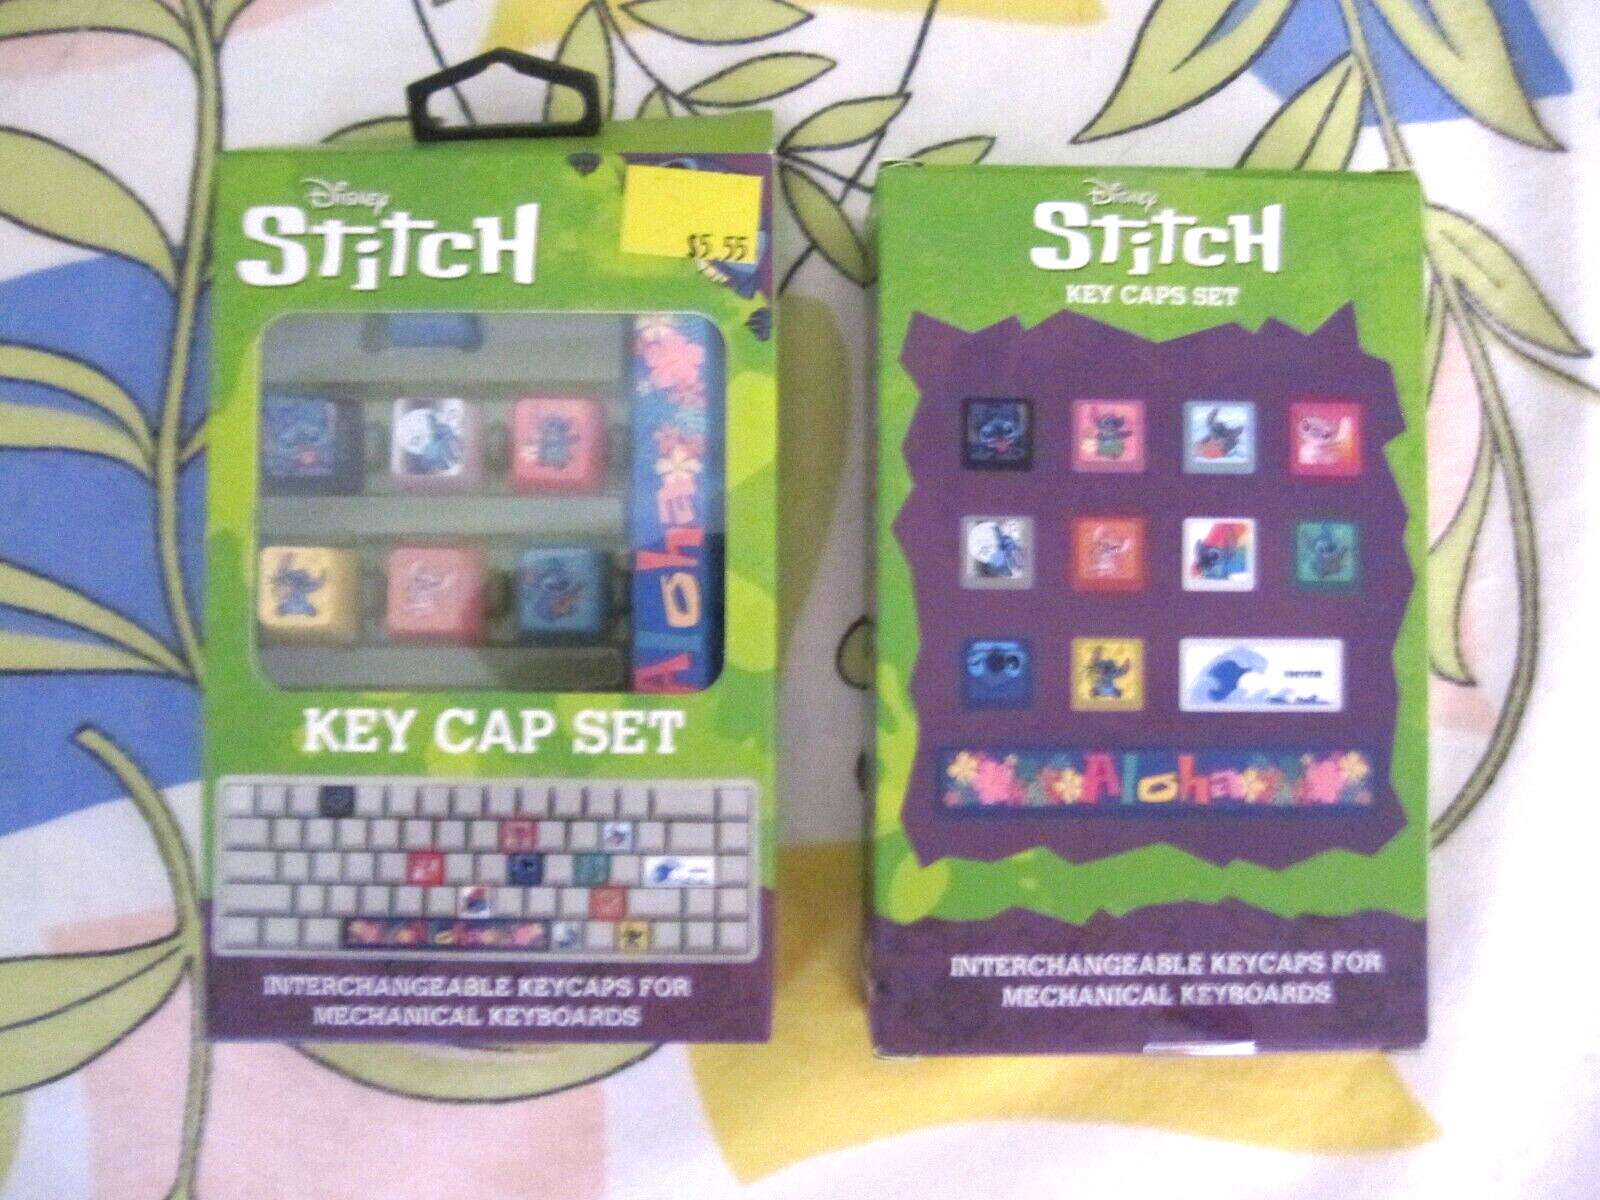 2 NEW Walt Disney Stitch Keyboard Key Cap Set Interchangeable Culturefly